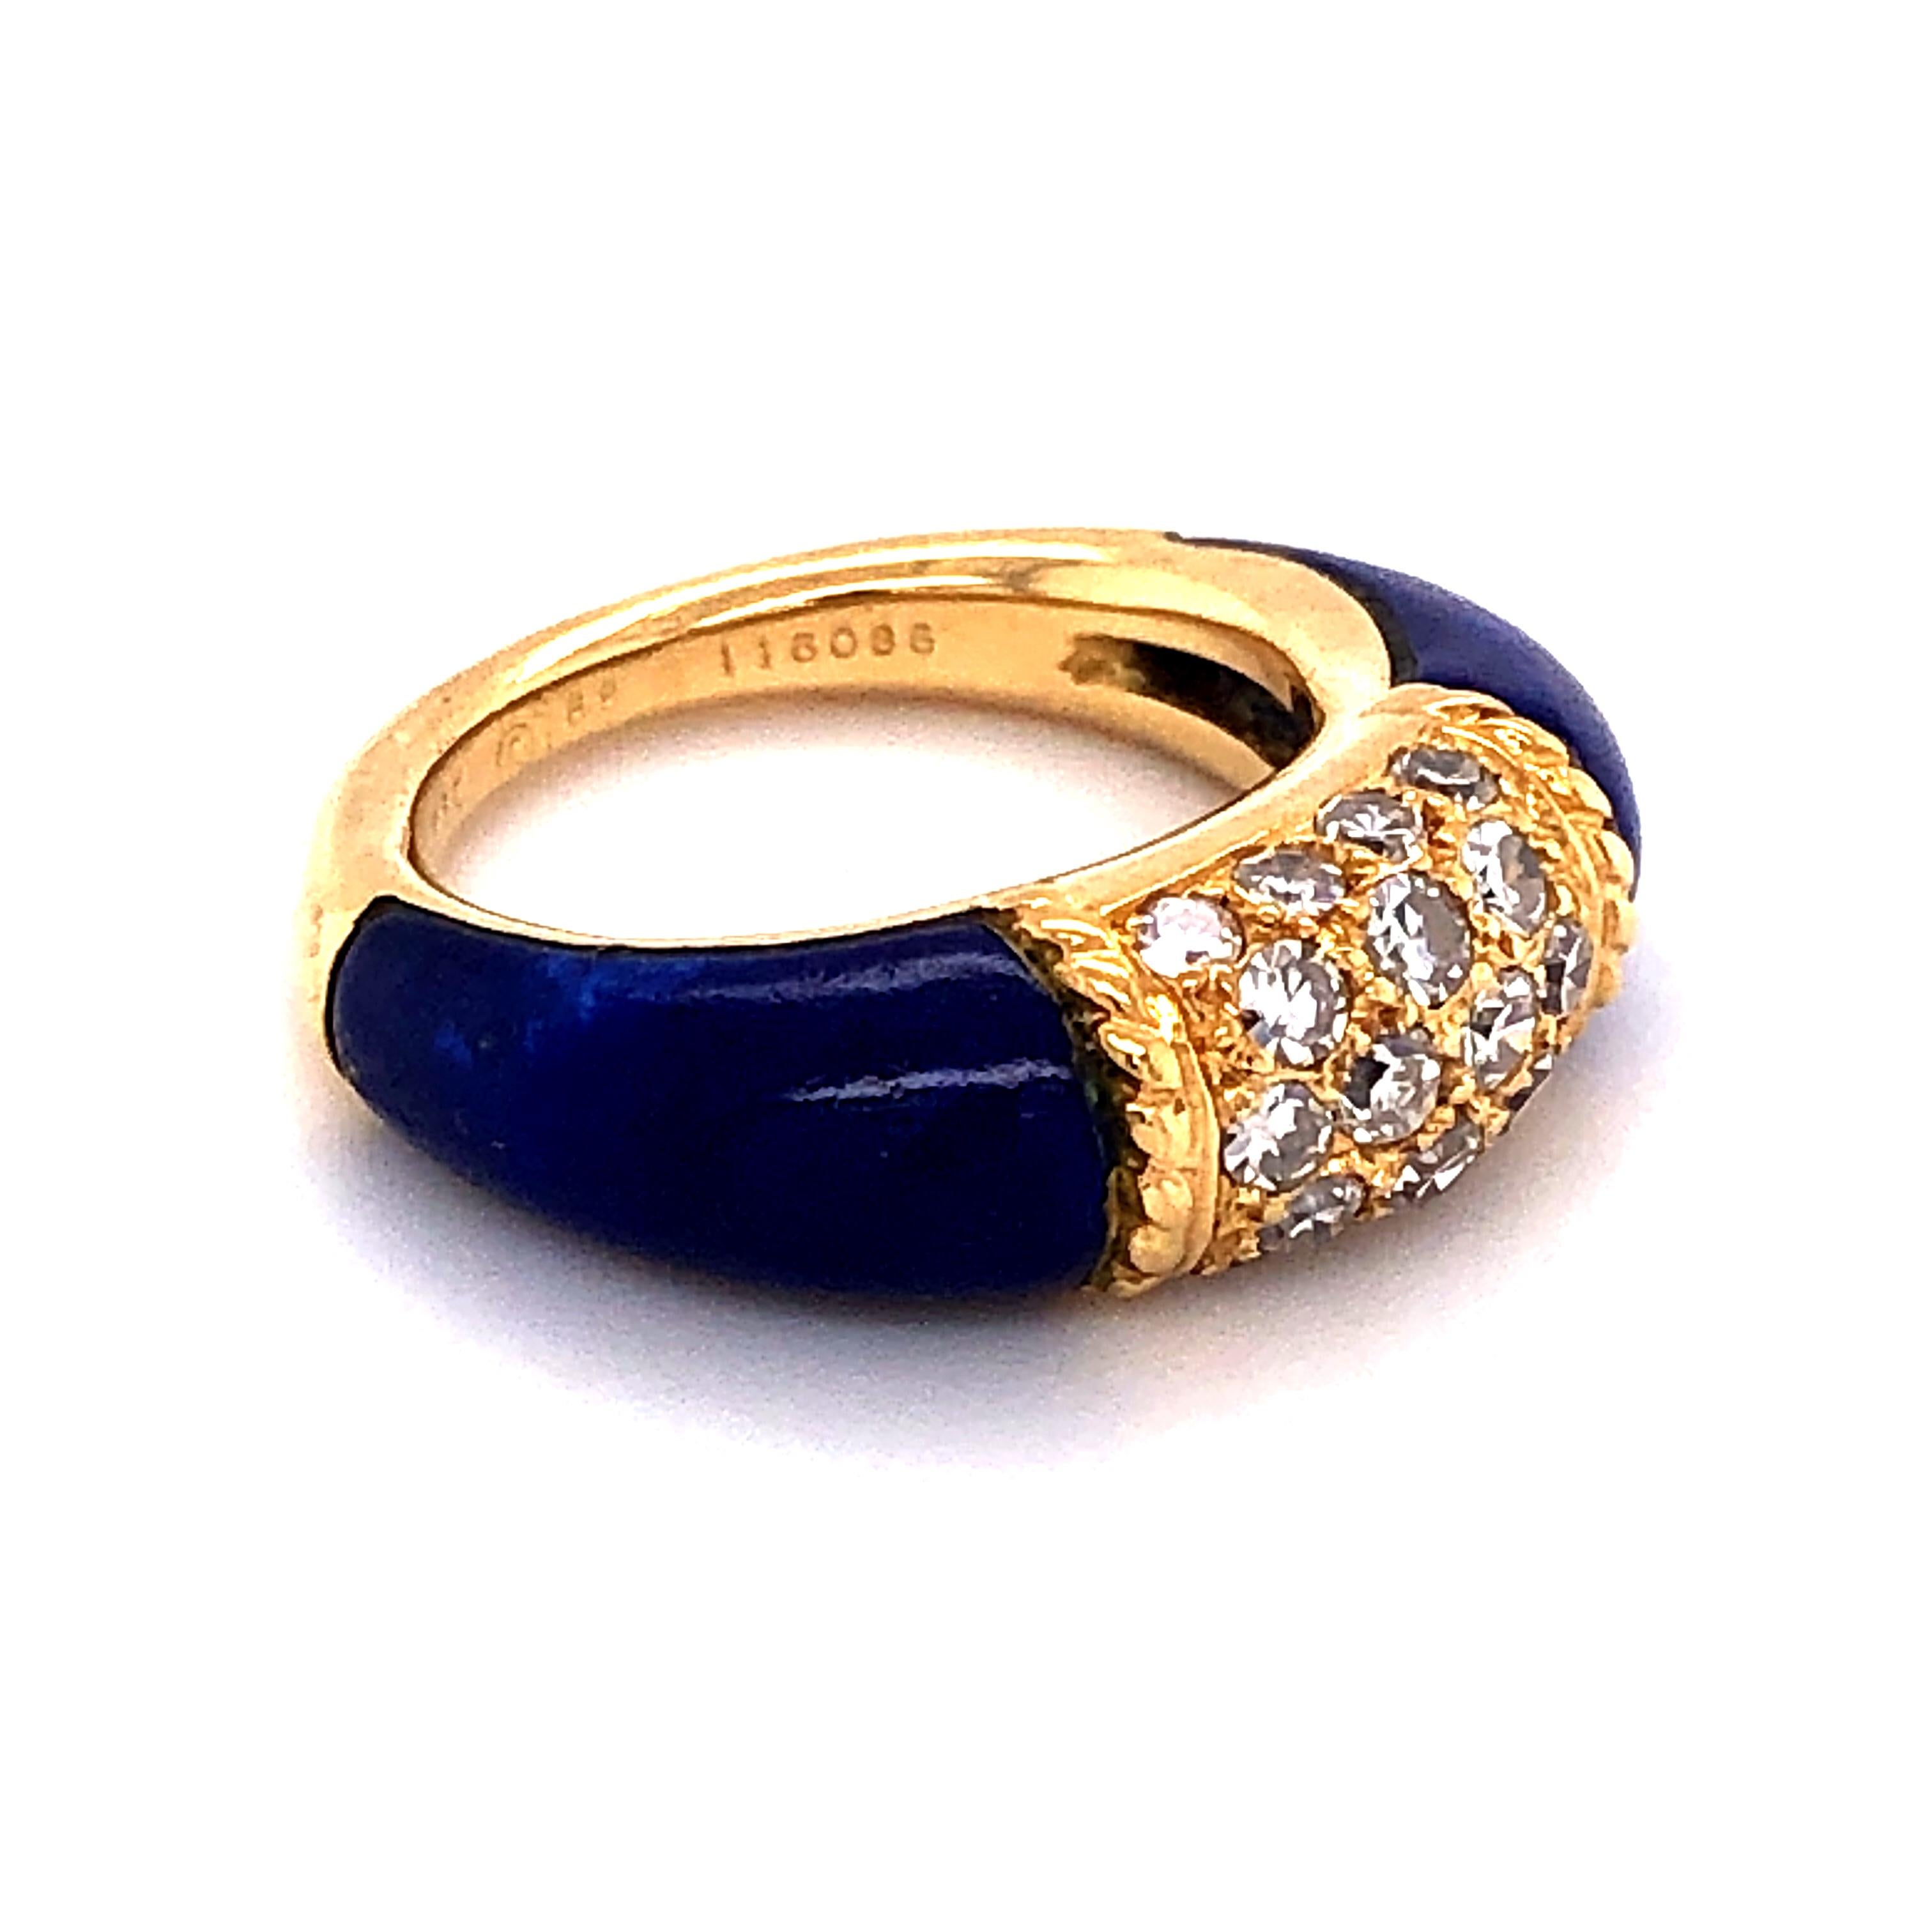 Van Cleef & Arpels yellow gold ring 